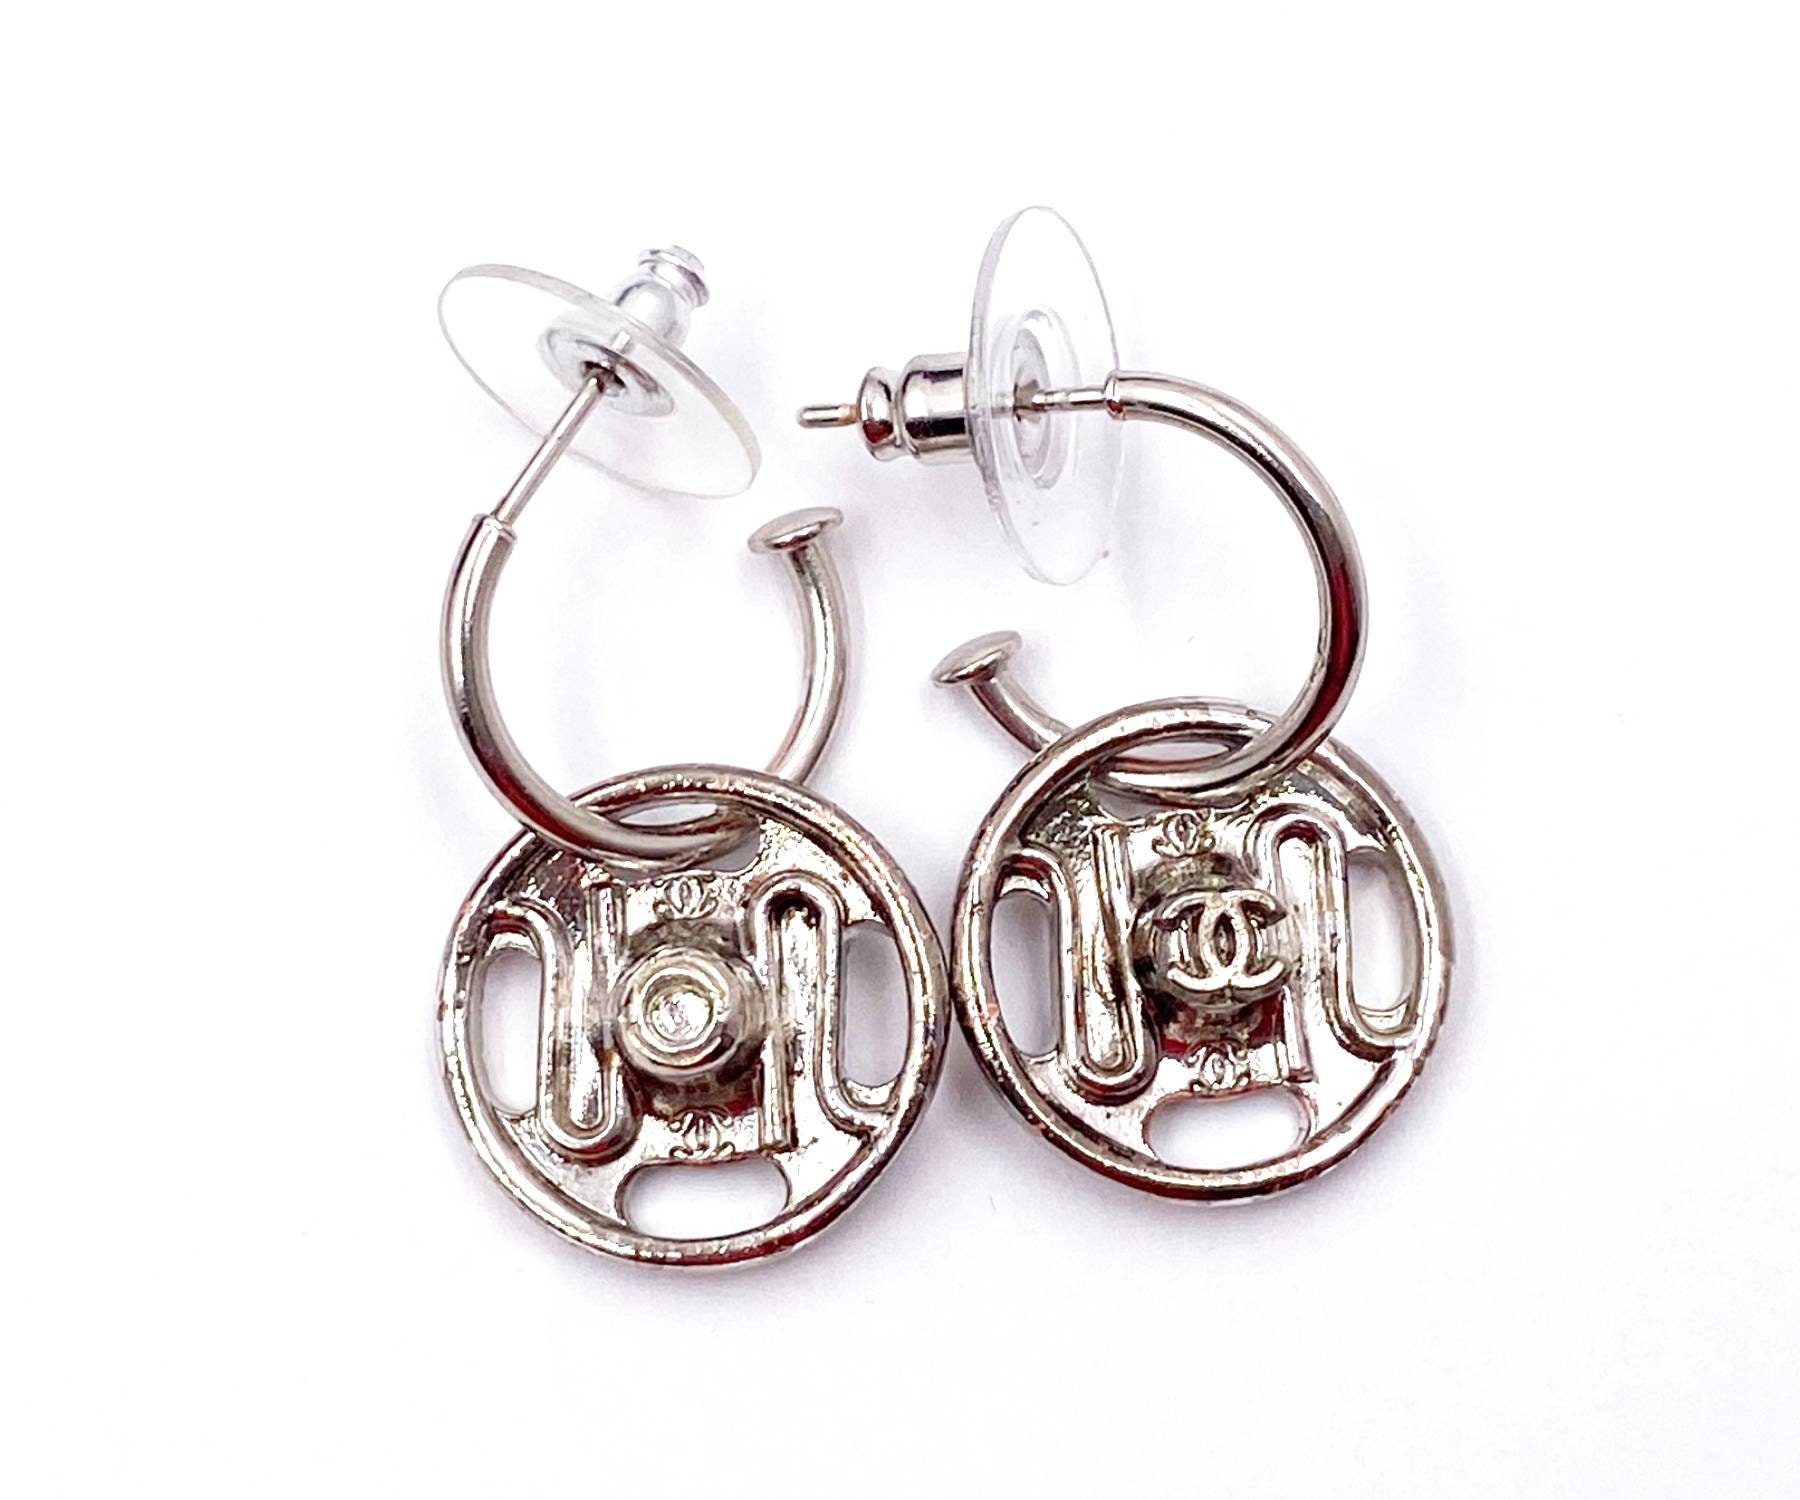 Chanel Bag Earring - 13 For Sale on 1stDibs  chanel bag earrings, chanel  handbag earrings, chanel purse earrings